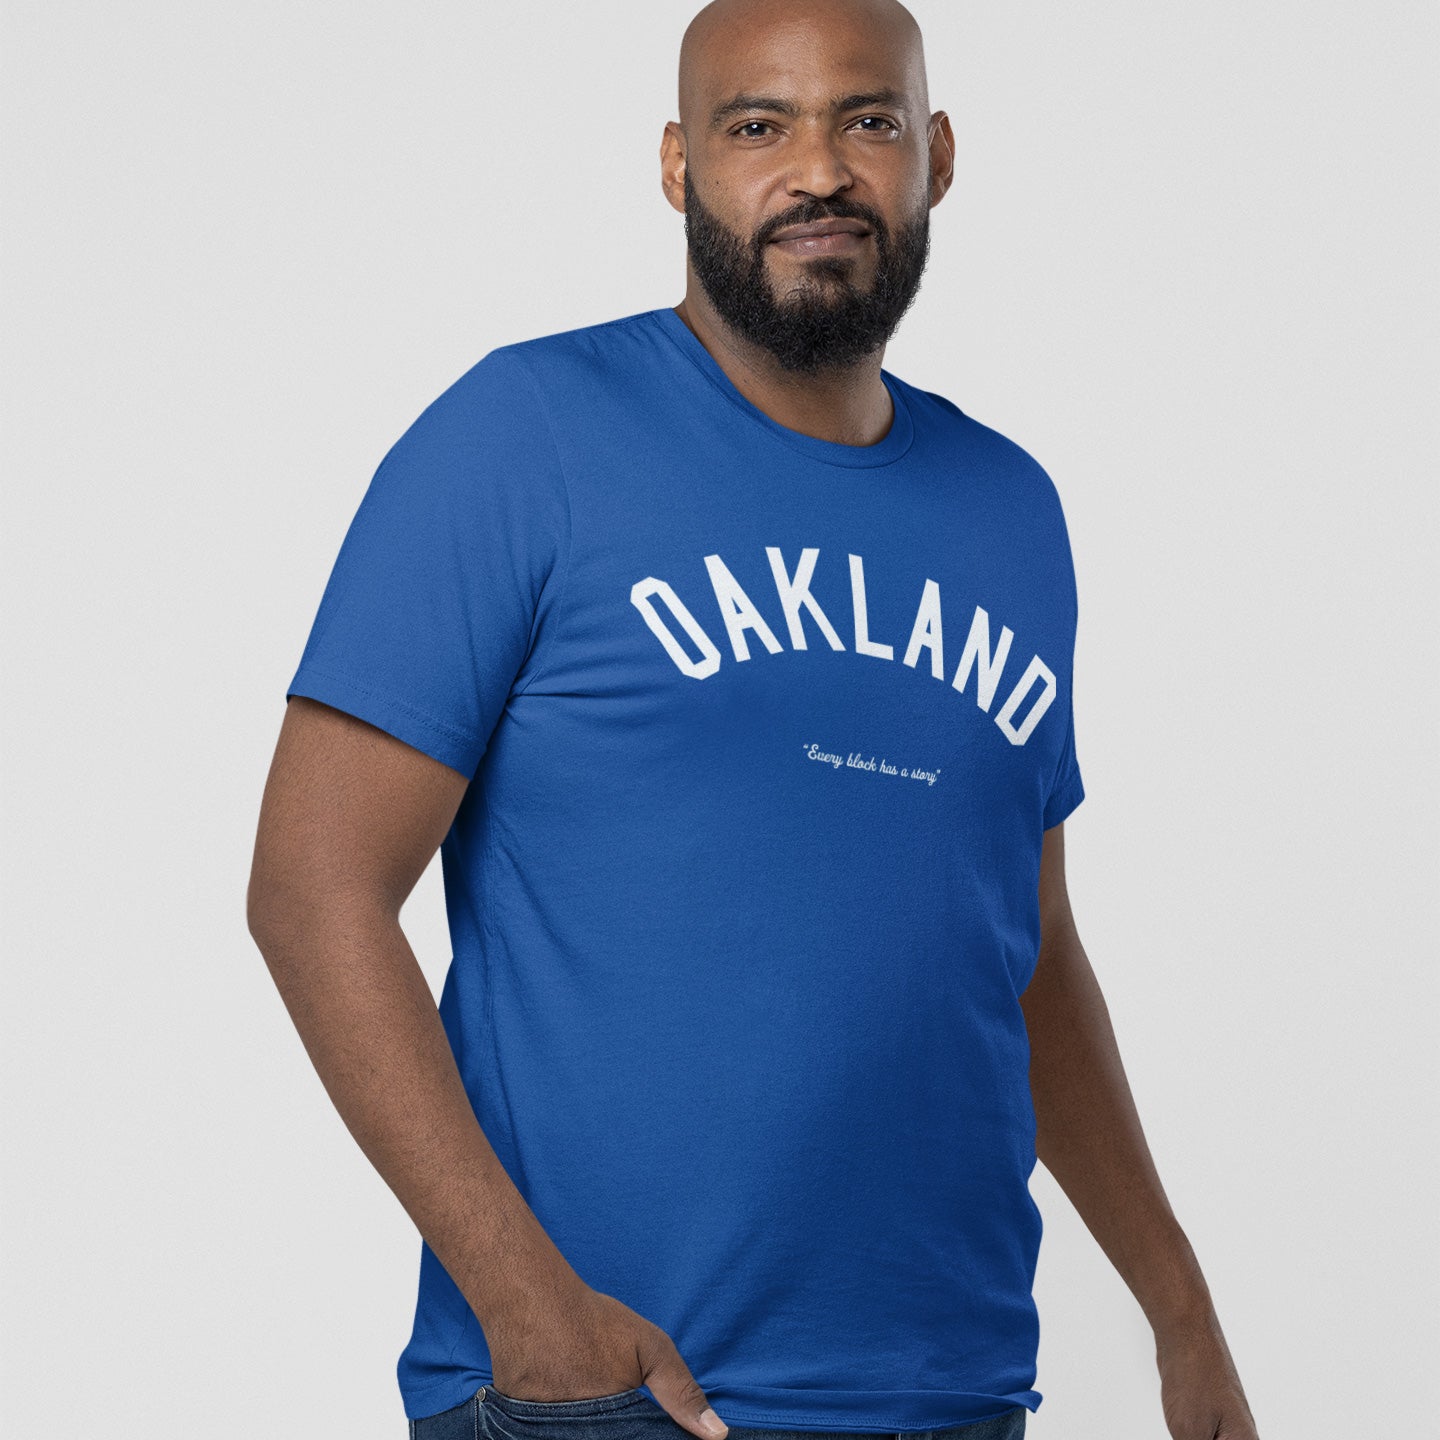 Oakland Story T-shirt